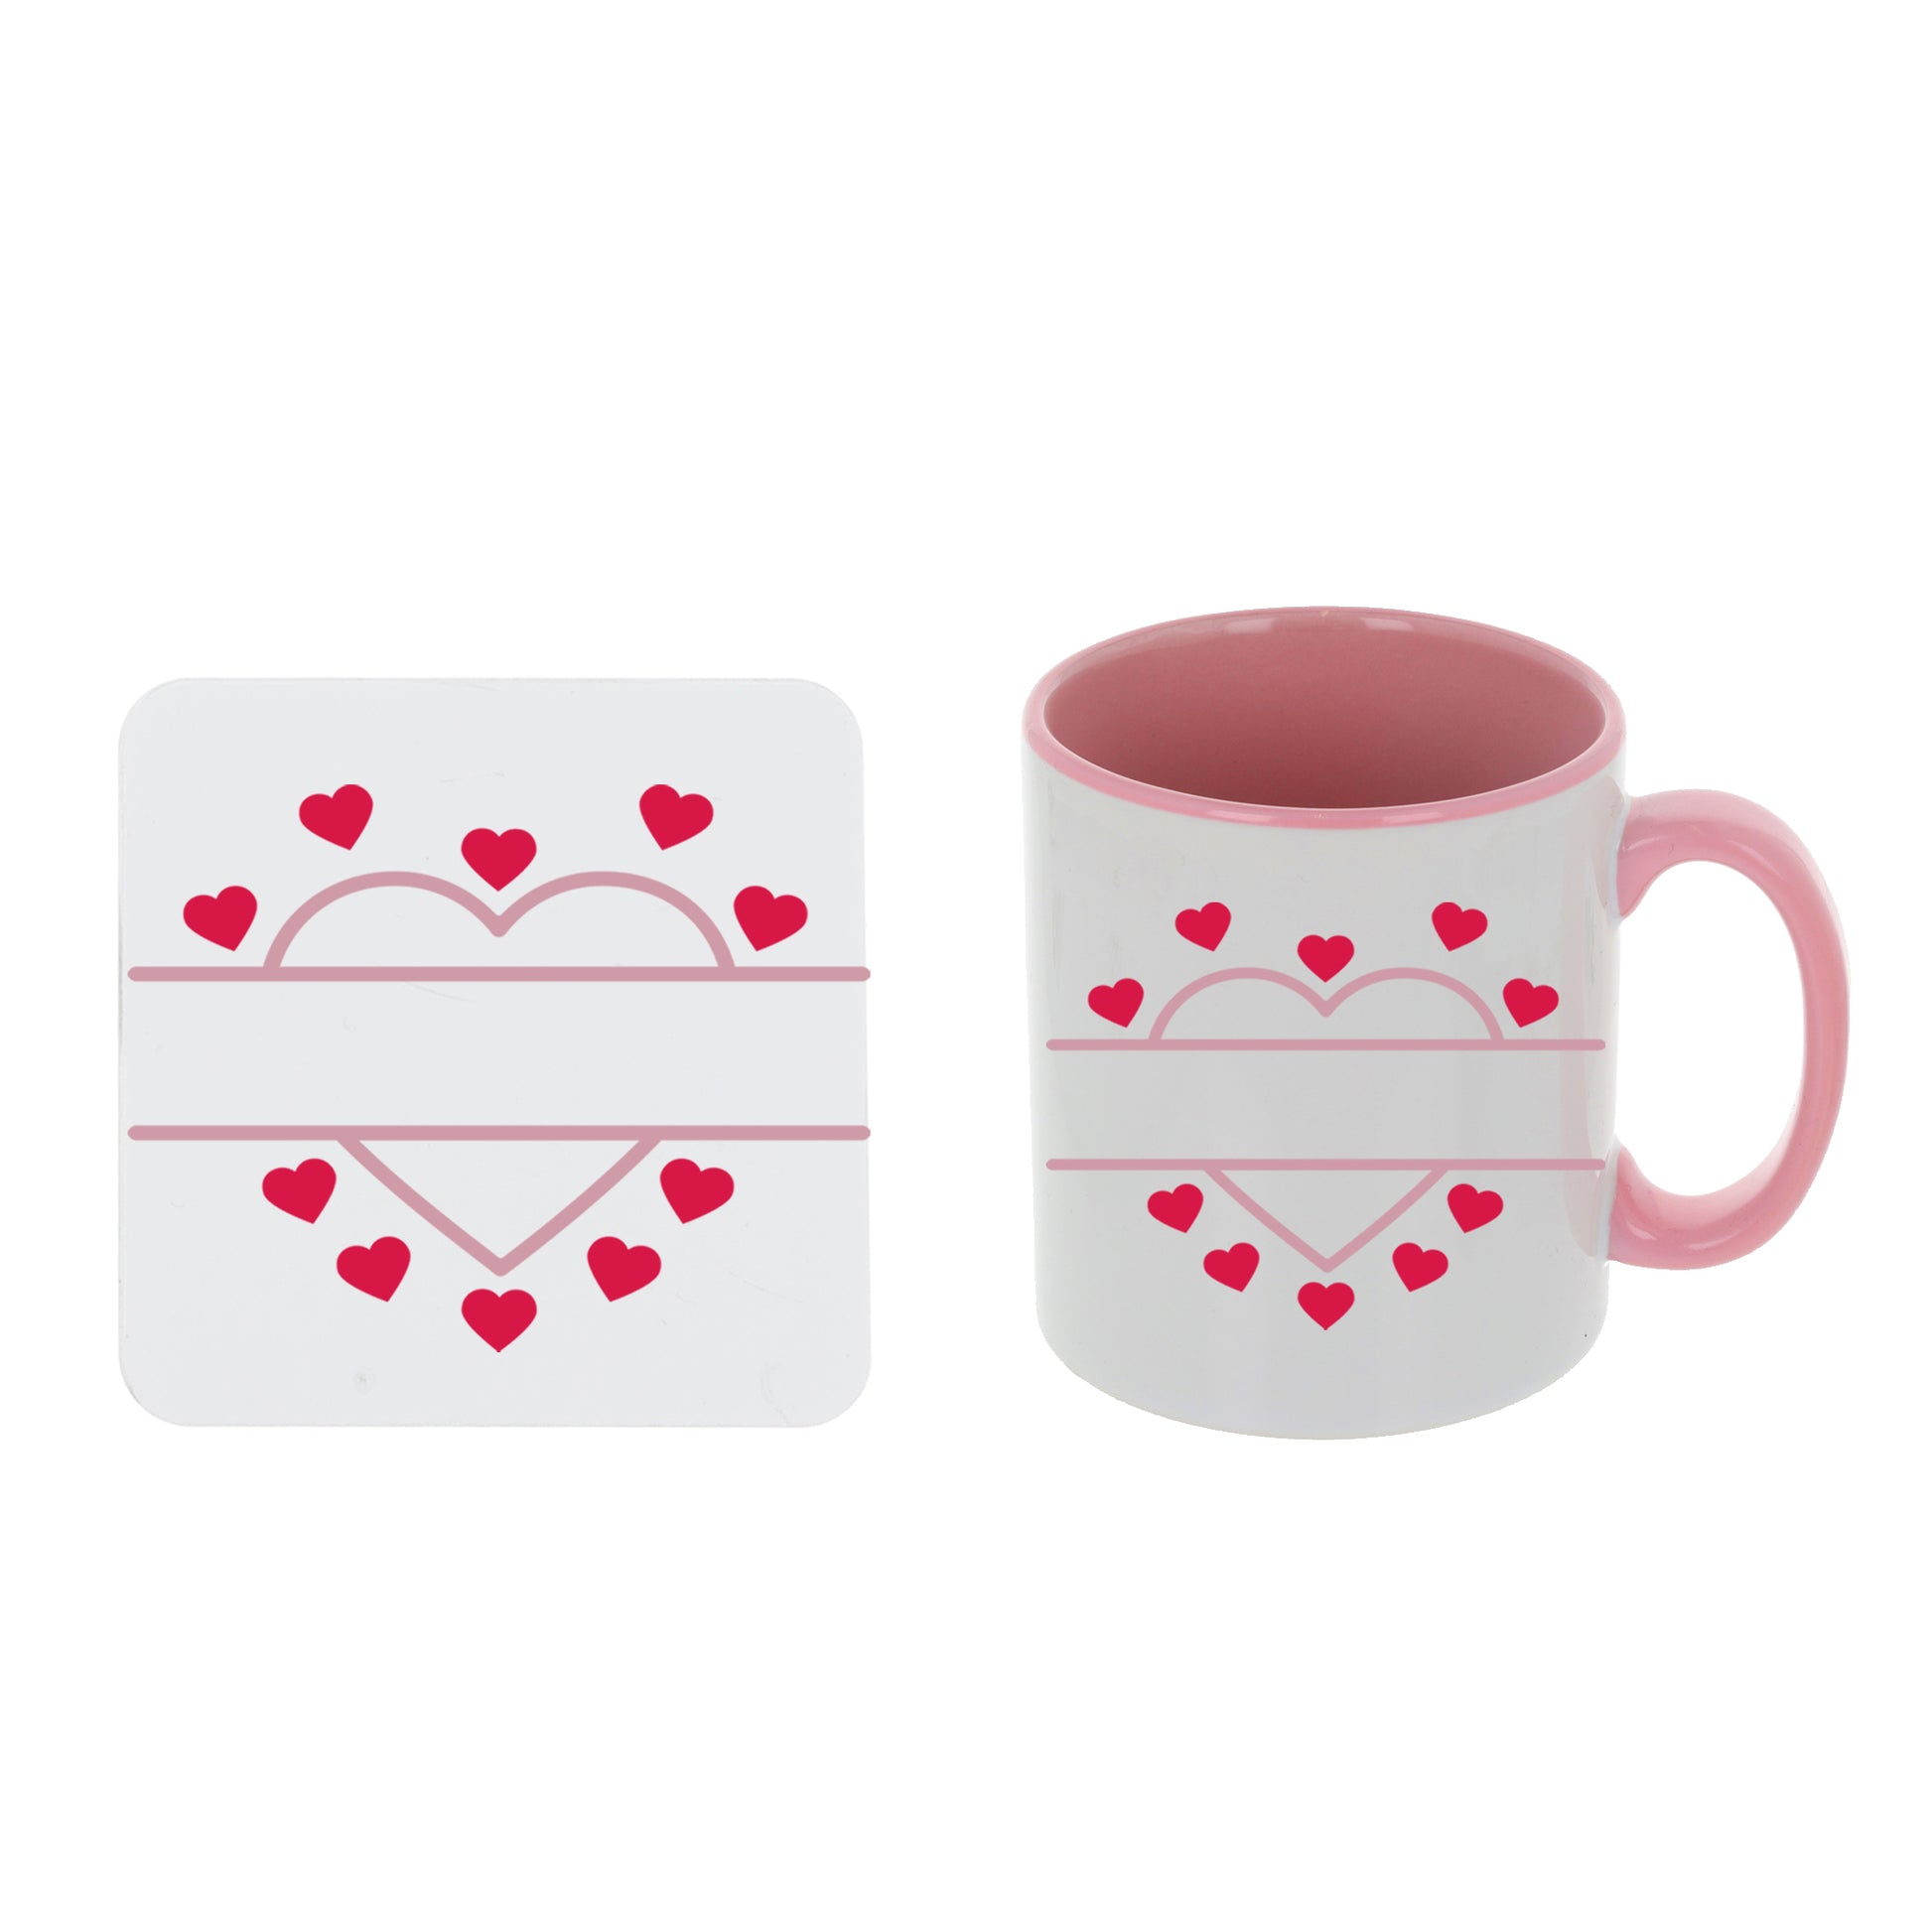 Personalised Pink Heart Design Mug and Coaster with Treats  - Always Looking Good - Empty Mug & Coaster Set  